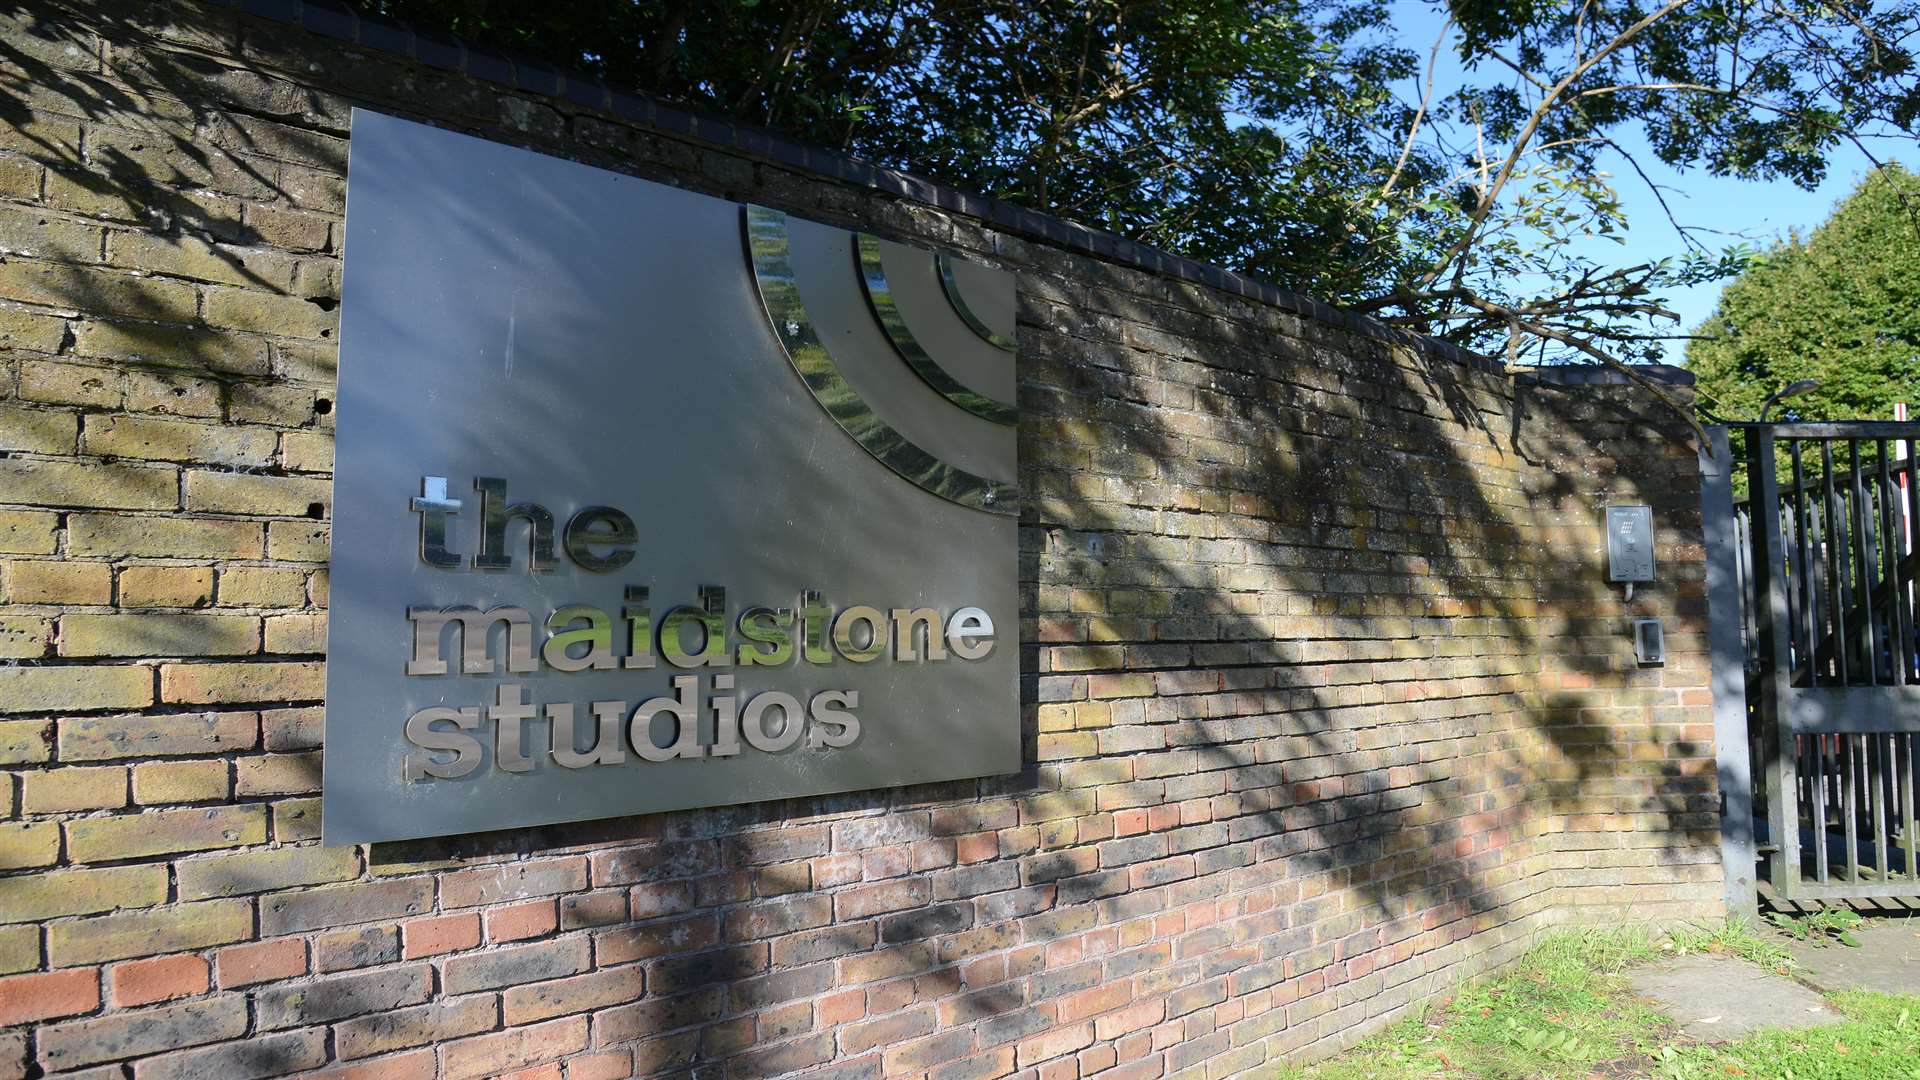 Maidstone Studios